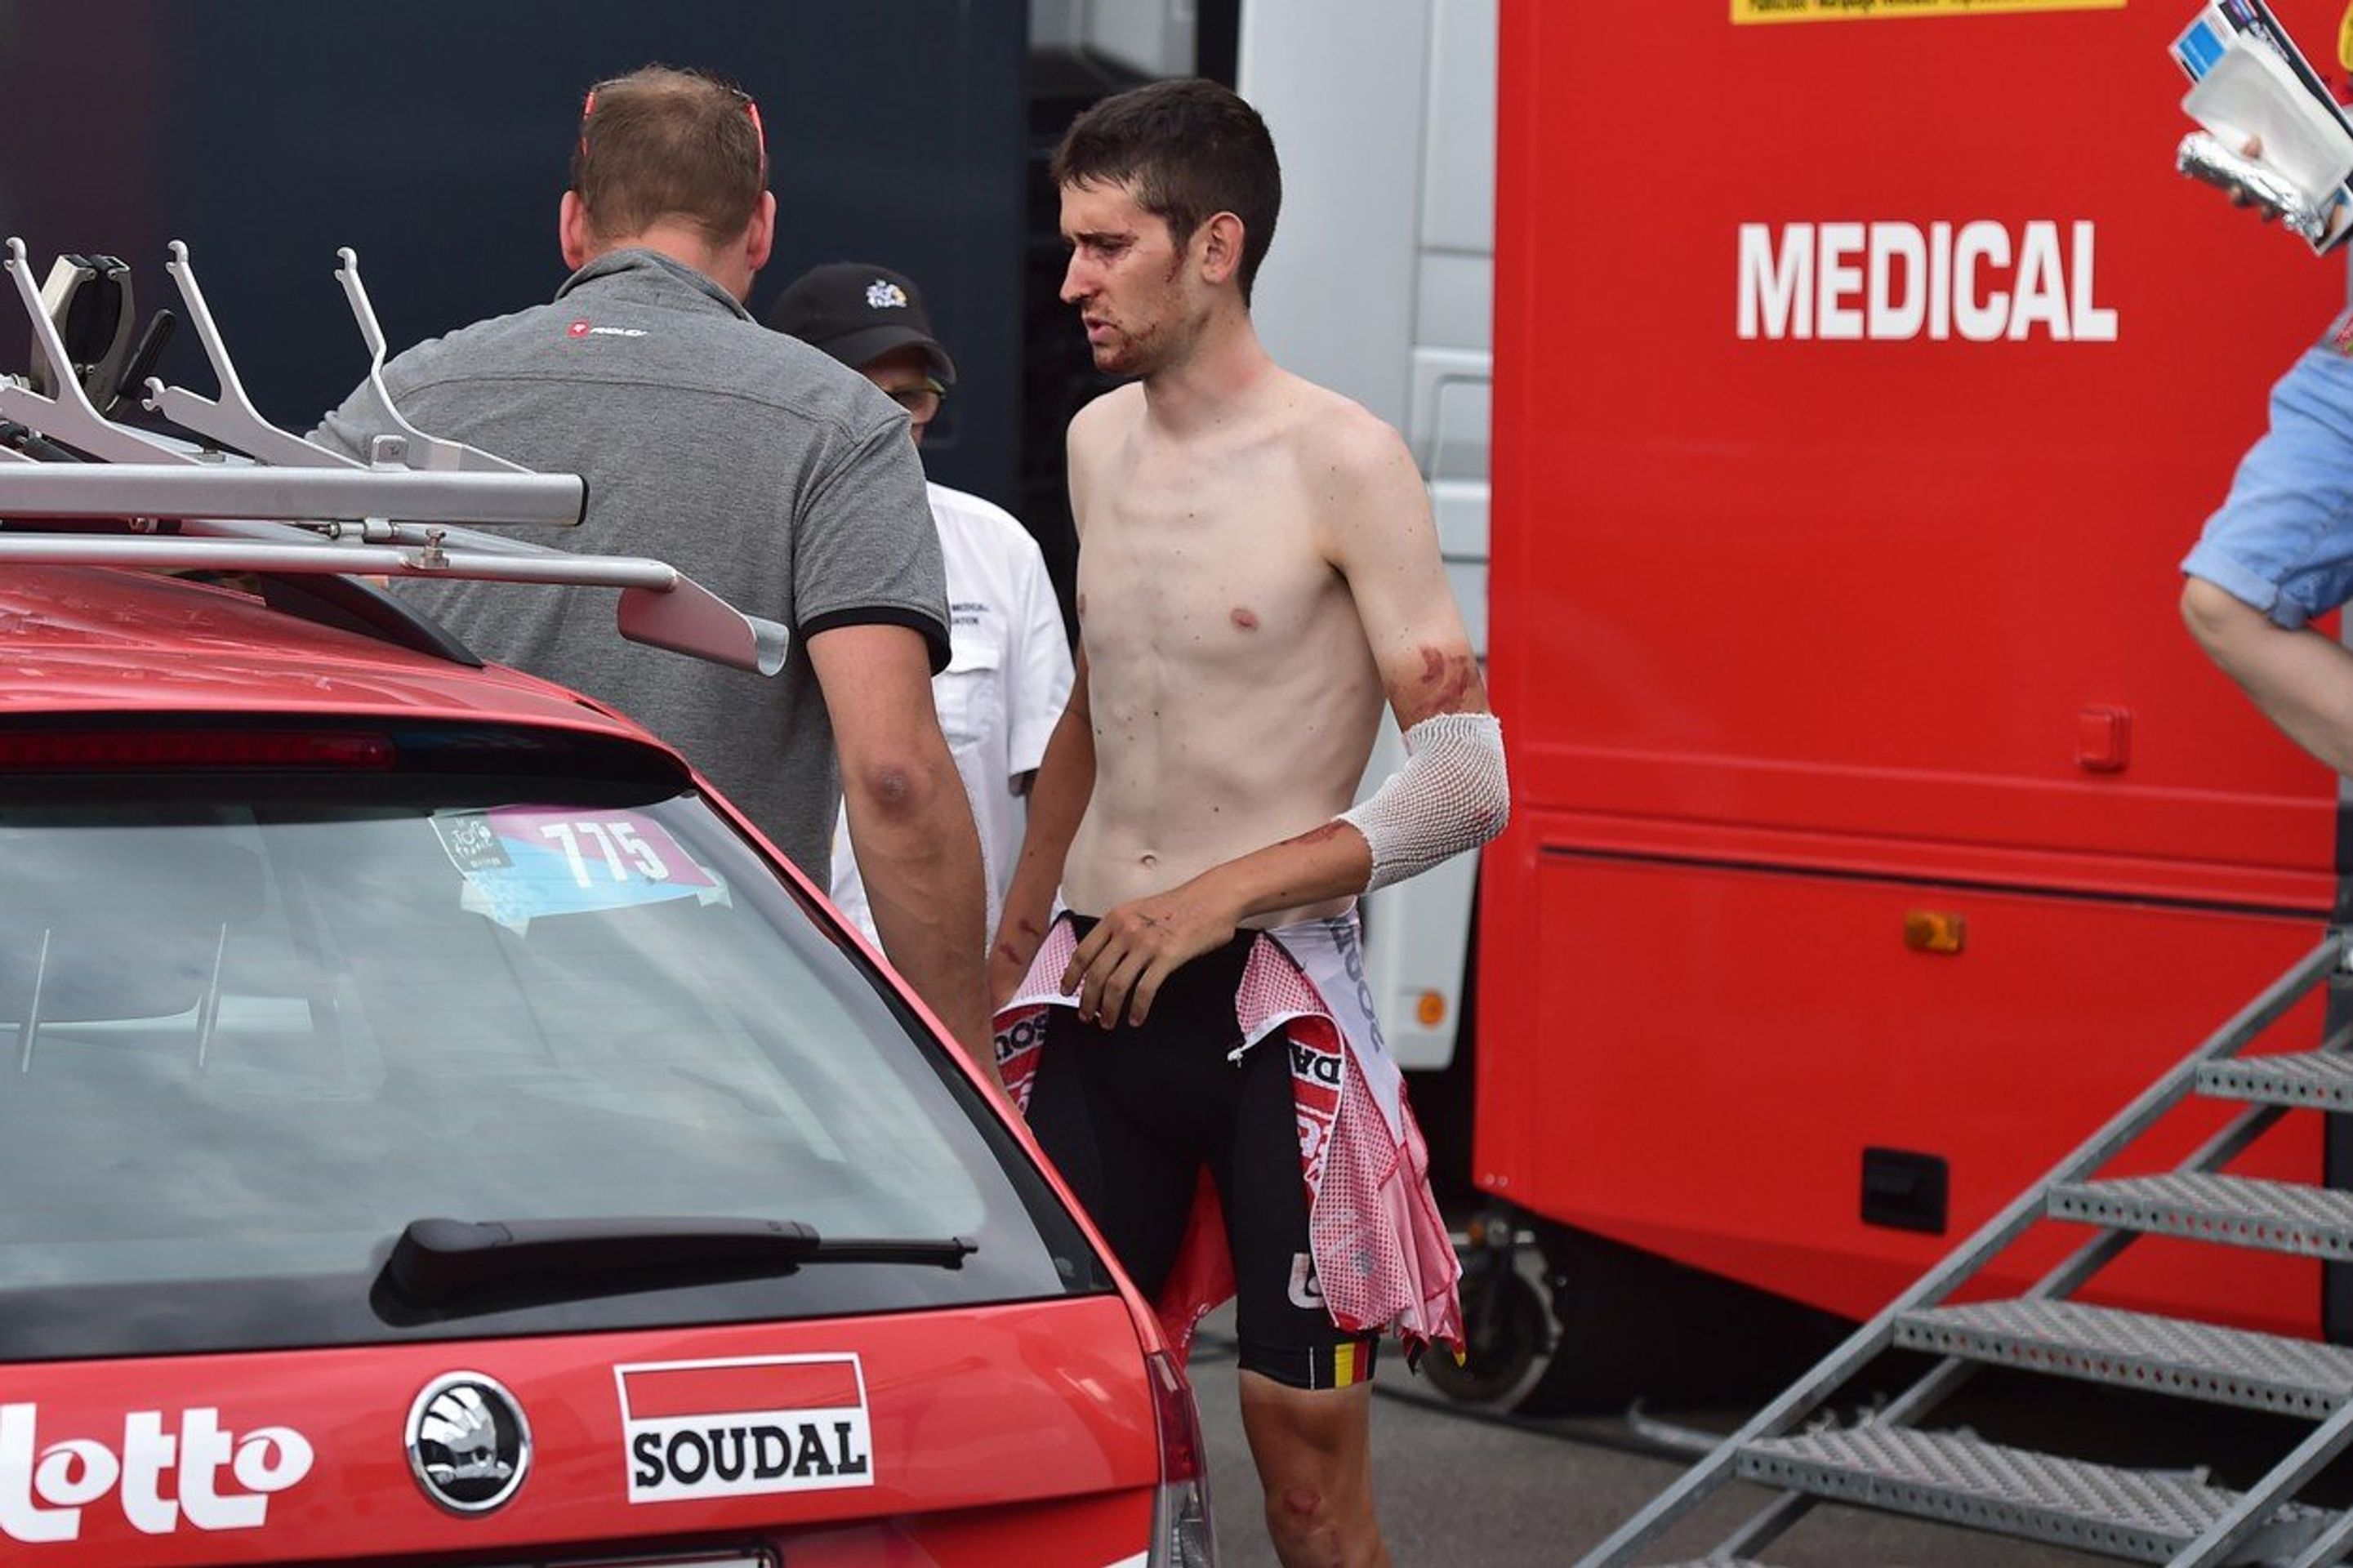 Tiesj Benoot - GALERIE: Belgický cyklista dokončil etapu na Tour celý od krve (3/4)